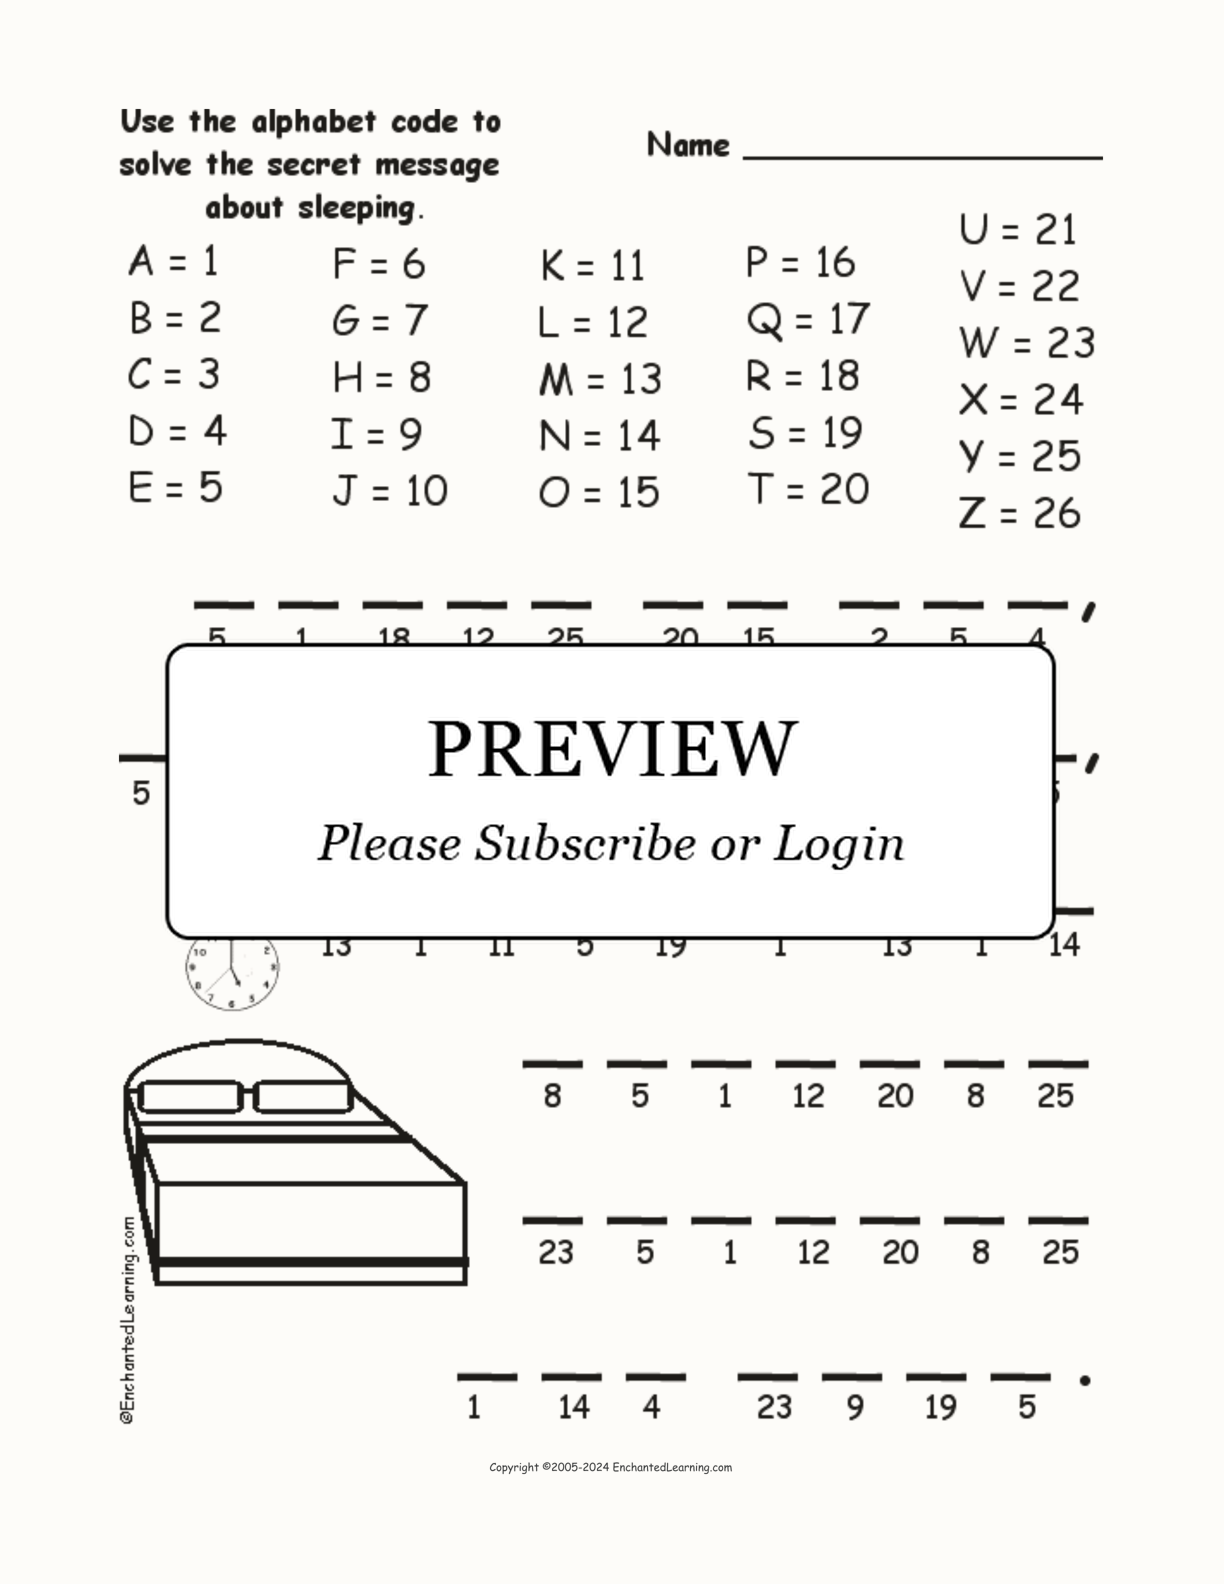 Sleeping Adage Alphabet Code interactive worksheet page 1